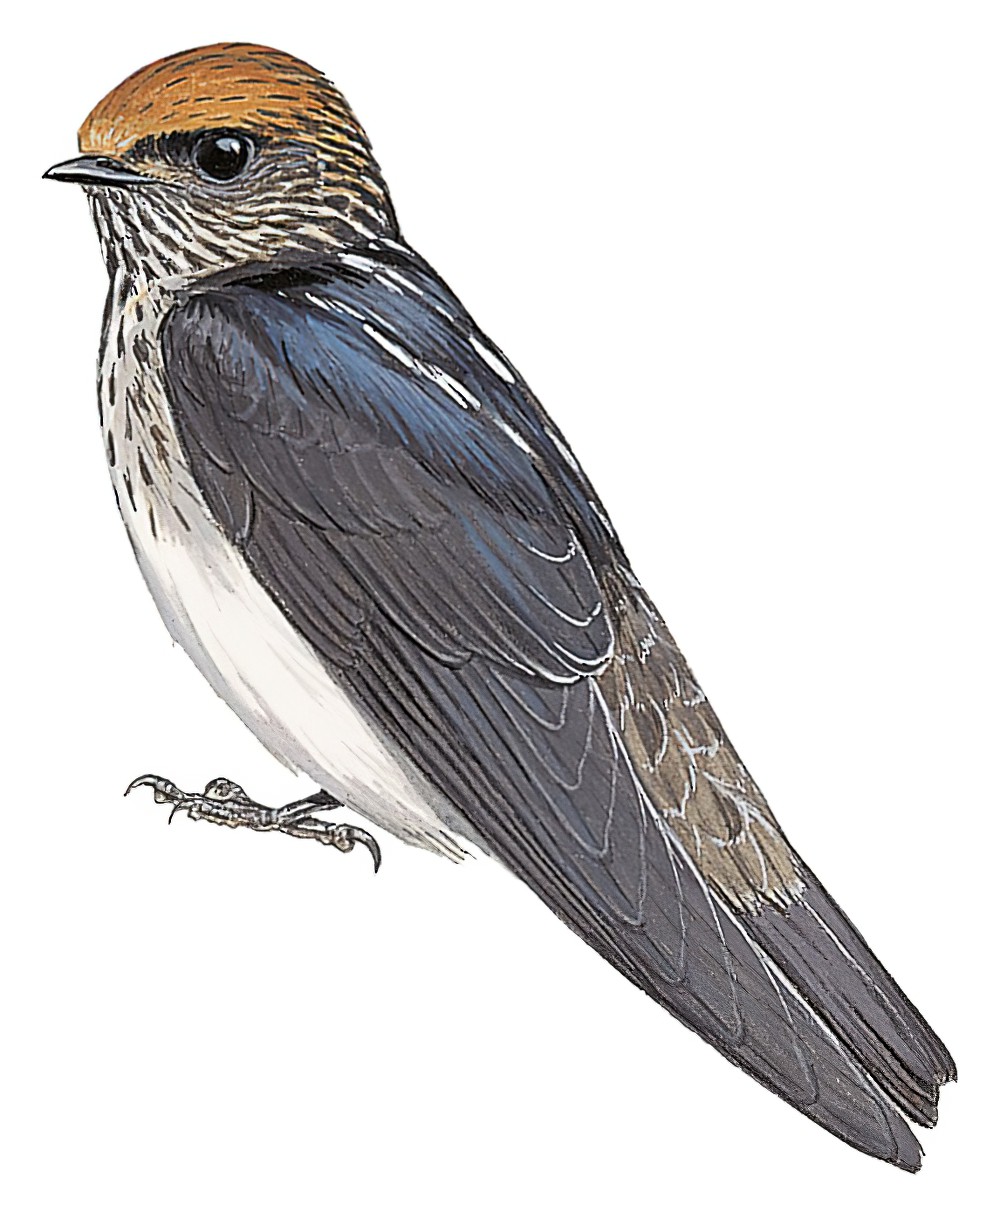 Streak-throated Swallow / Petrochelidon fluvicola